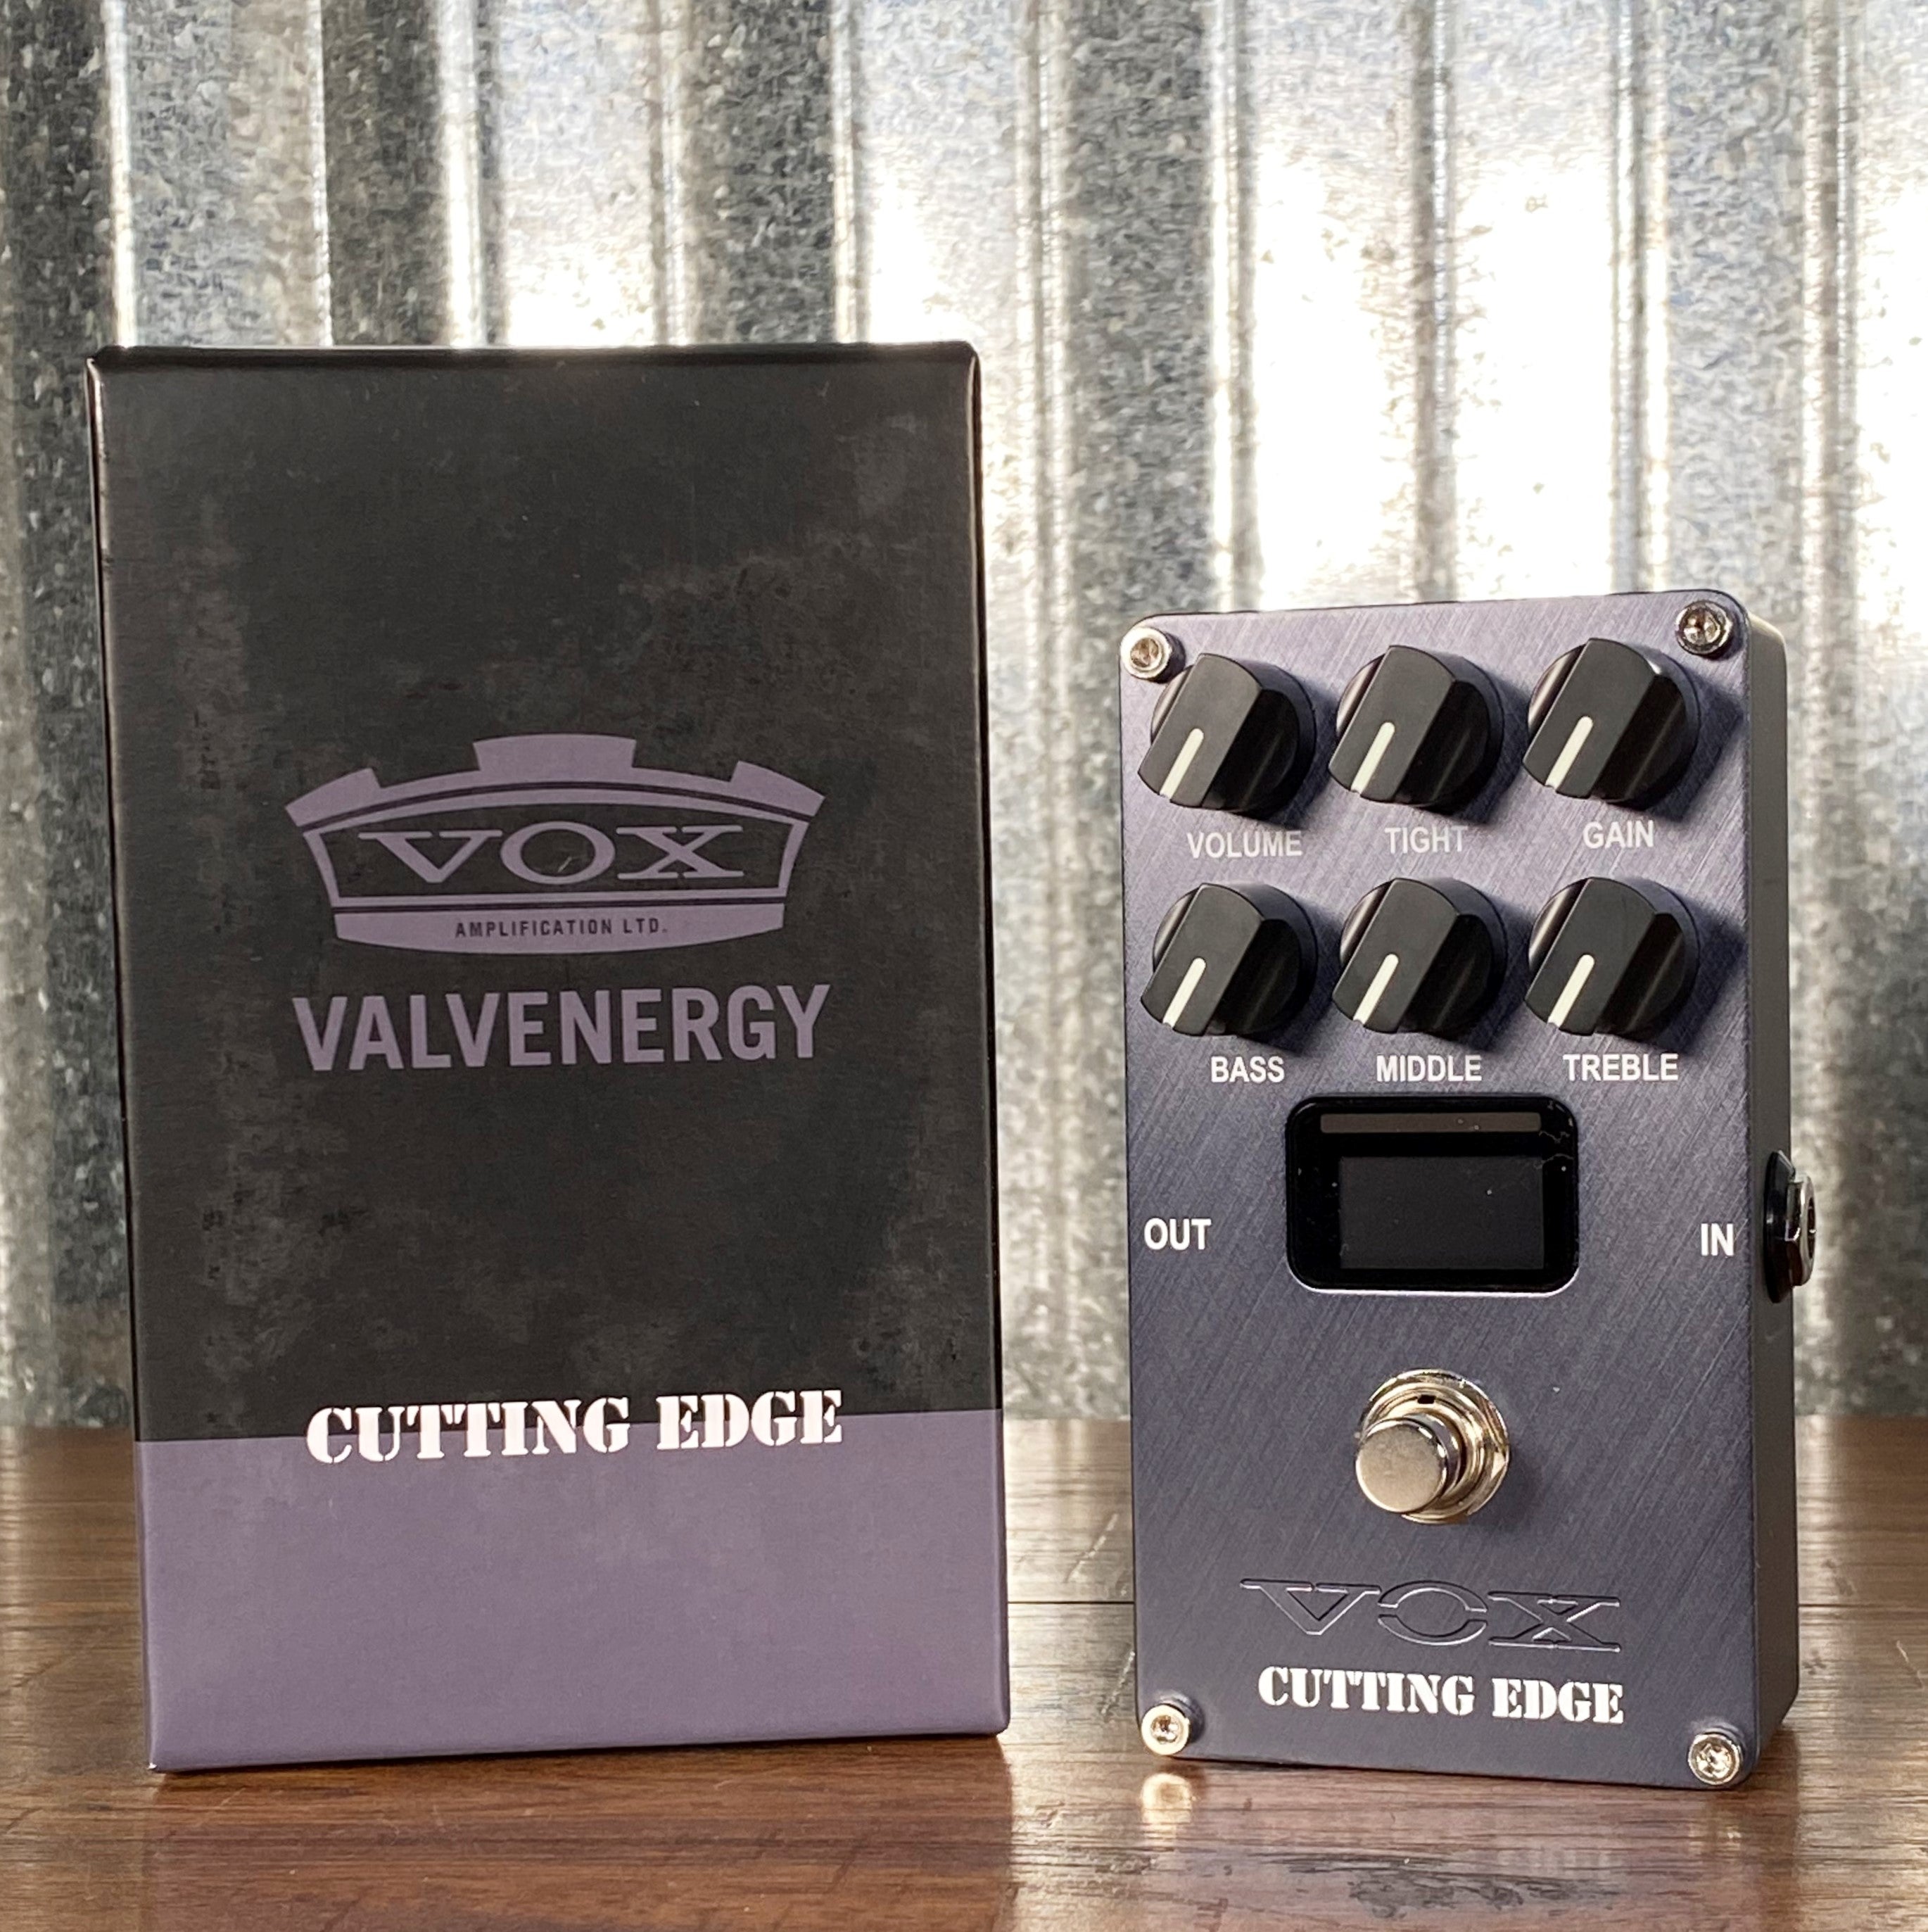 VOX VE-CE Valvenergy Cutting Edge High Gain Overdrive Guitar